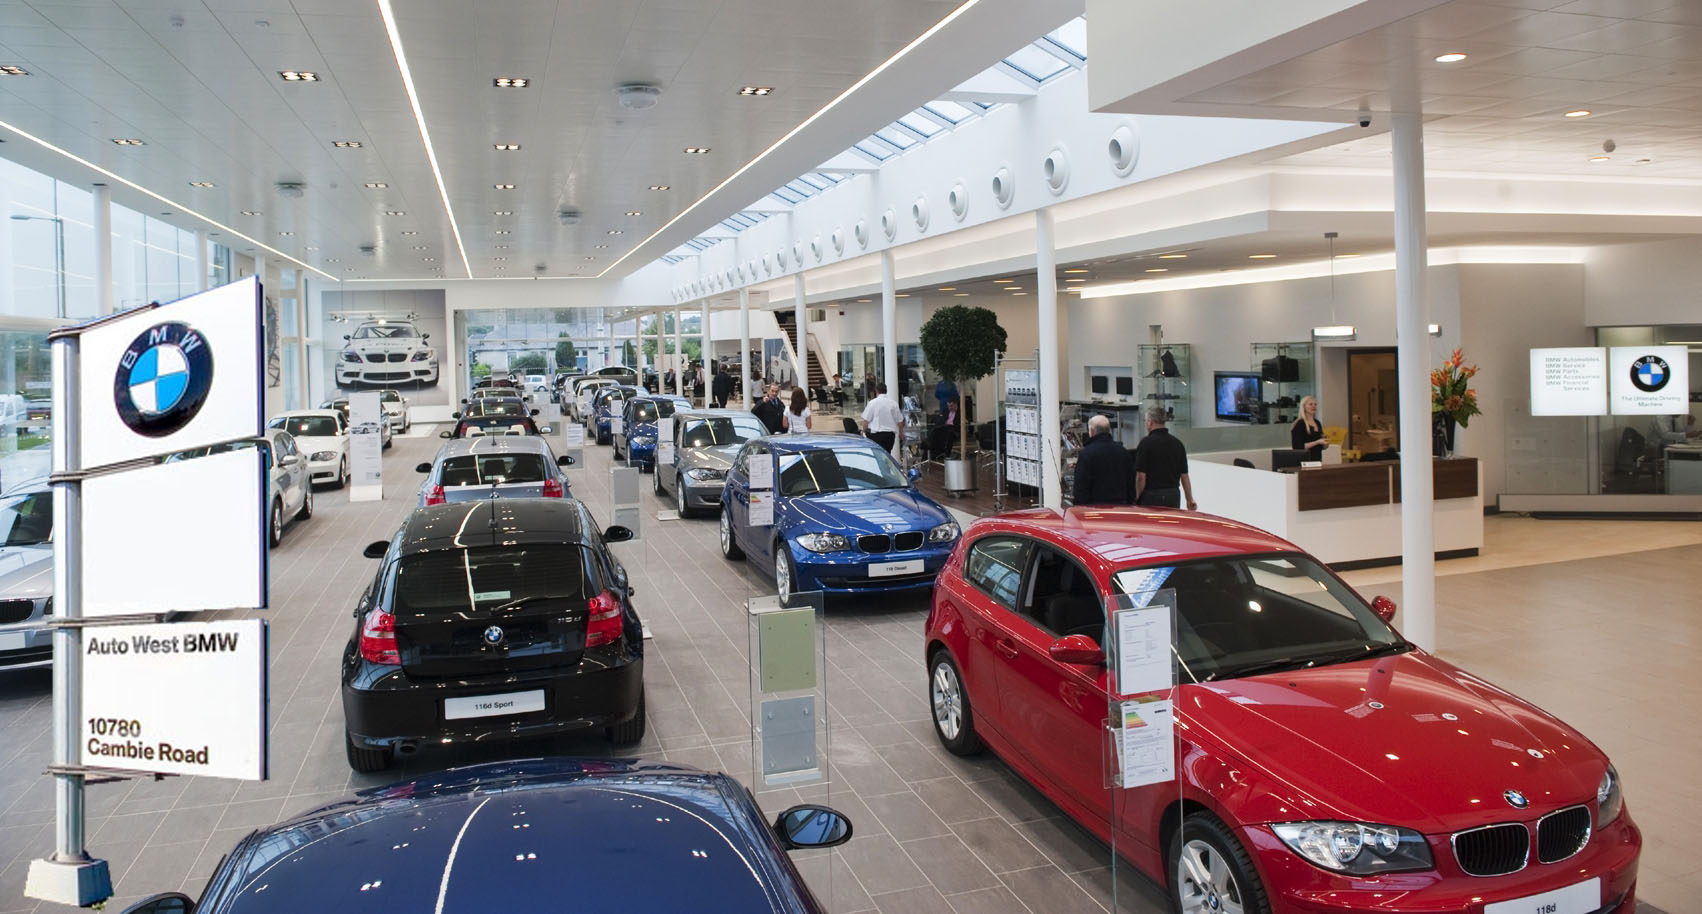 The Best For The Automobile Dealership Group dealership car rentals